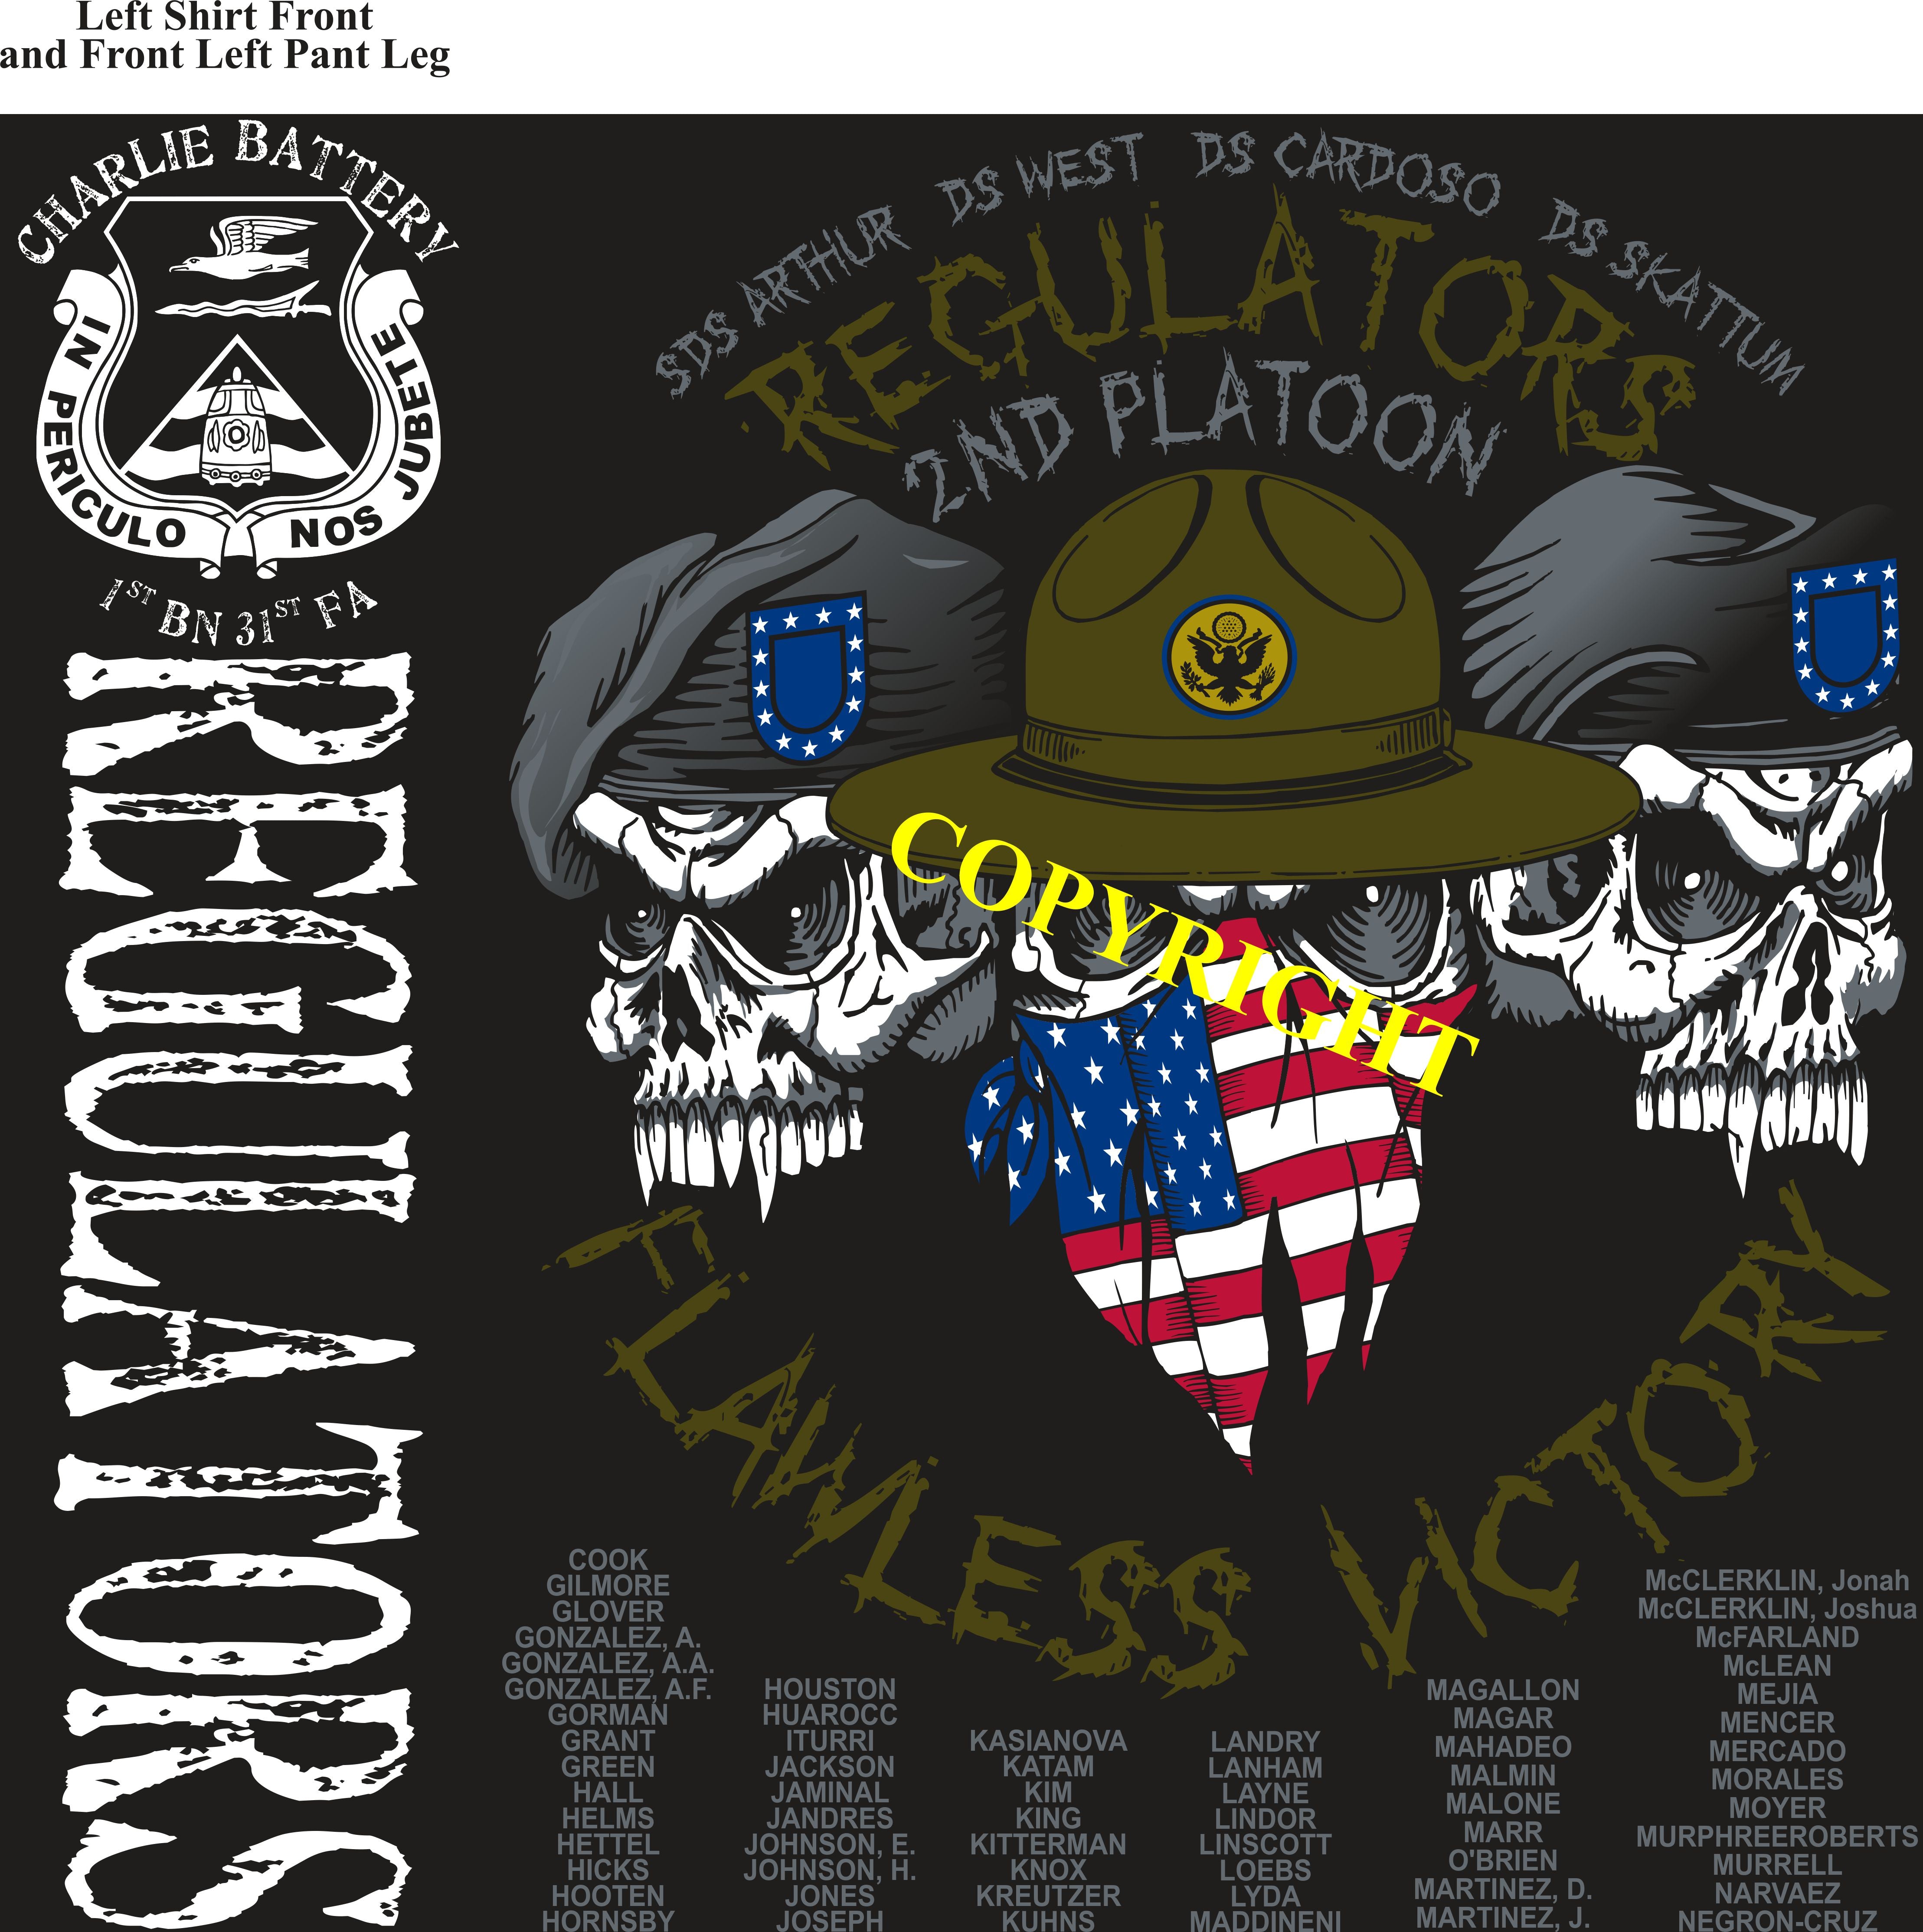 Platoon Shirts (2nd generation print) CHARLIE 1st 31st REGULATORS FEB 2019